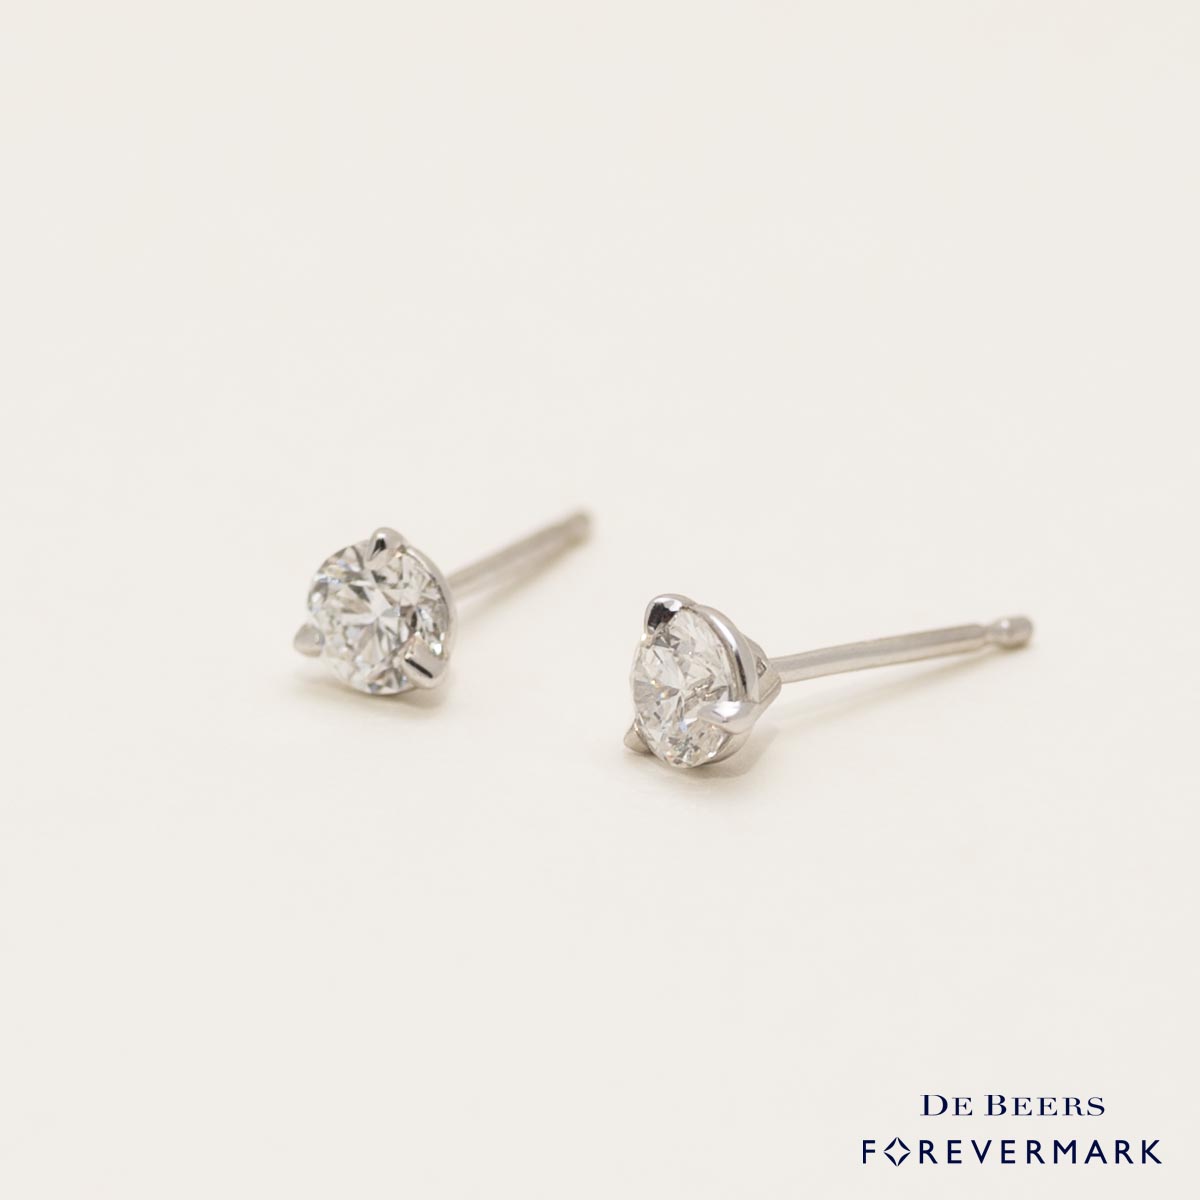 De Beers Forevermark Diamond Martini Style Stud Earrings in 18kt White Gold (3/8ct tw)